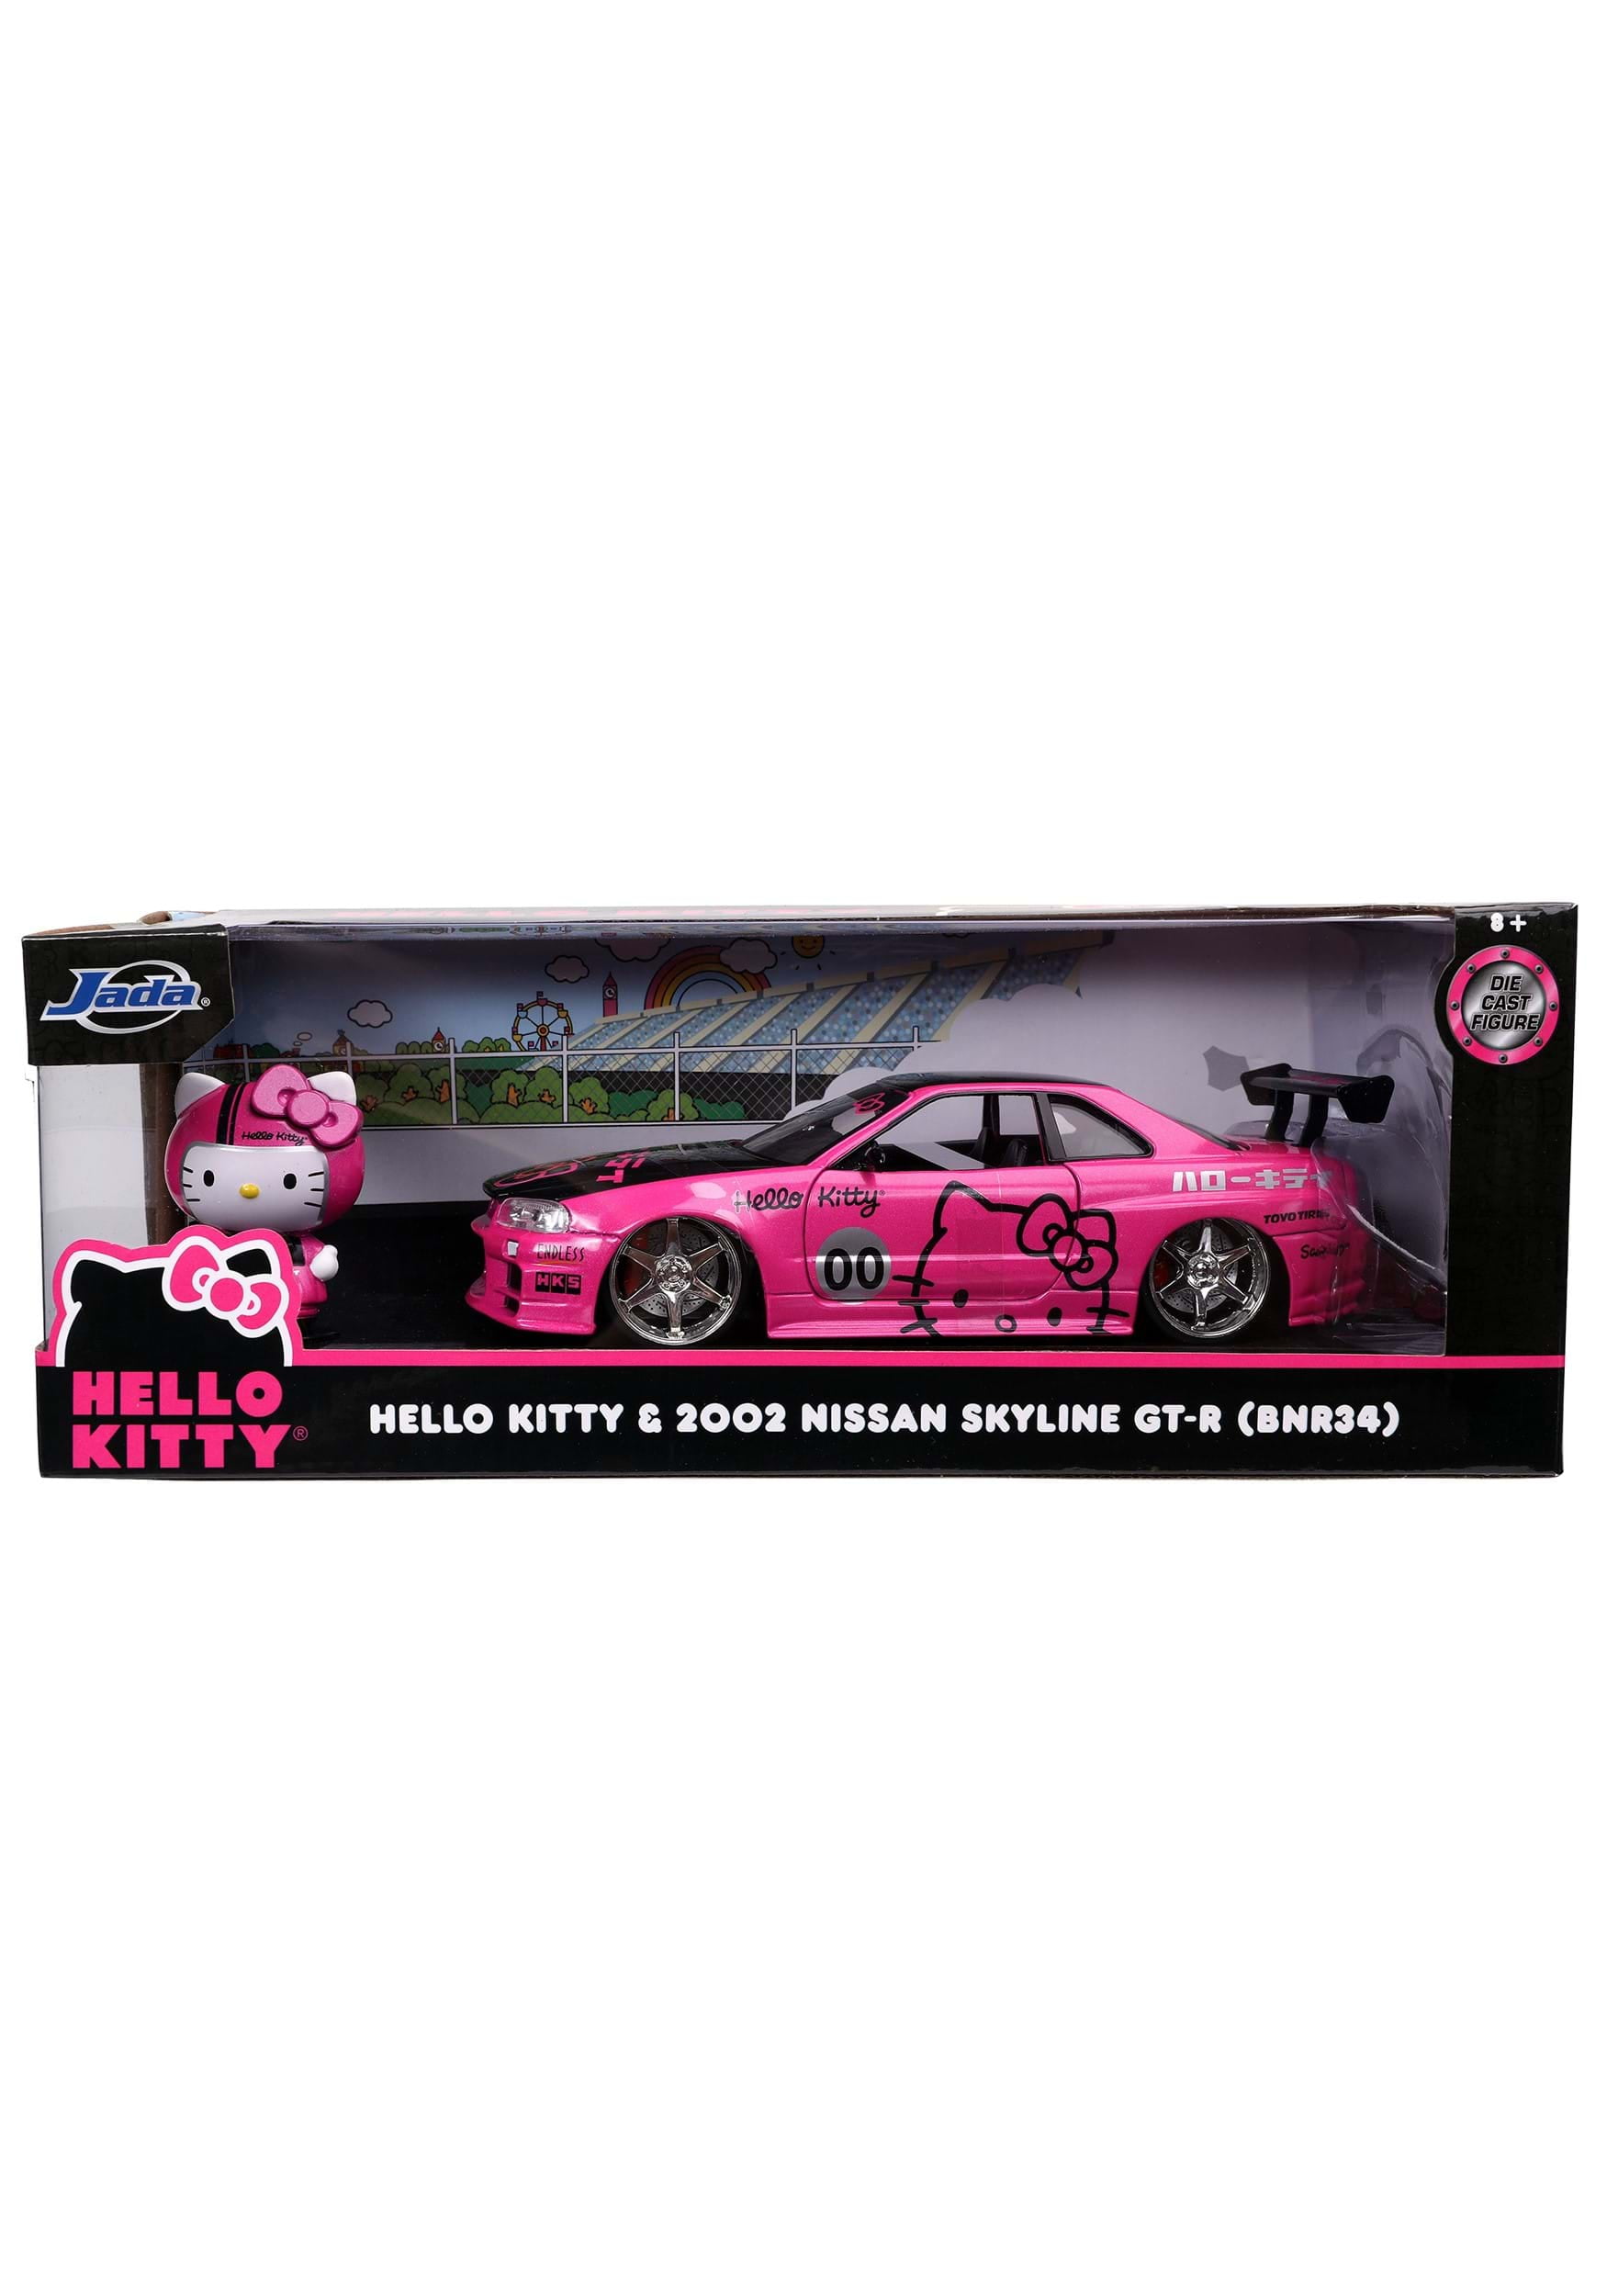 Jada Toys Hello Kitty Nissan Skyline GT-R (Bnr34) Drift Power Slide Elite  R/C, USB Charging, with 4 Extra Tires